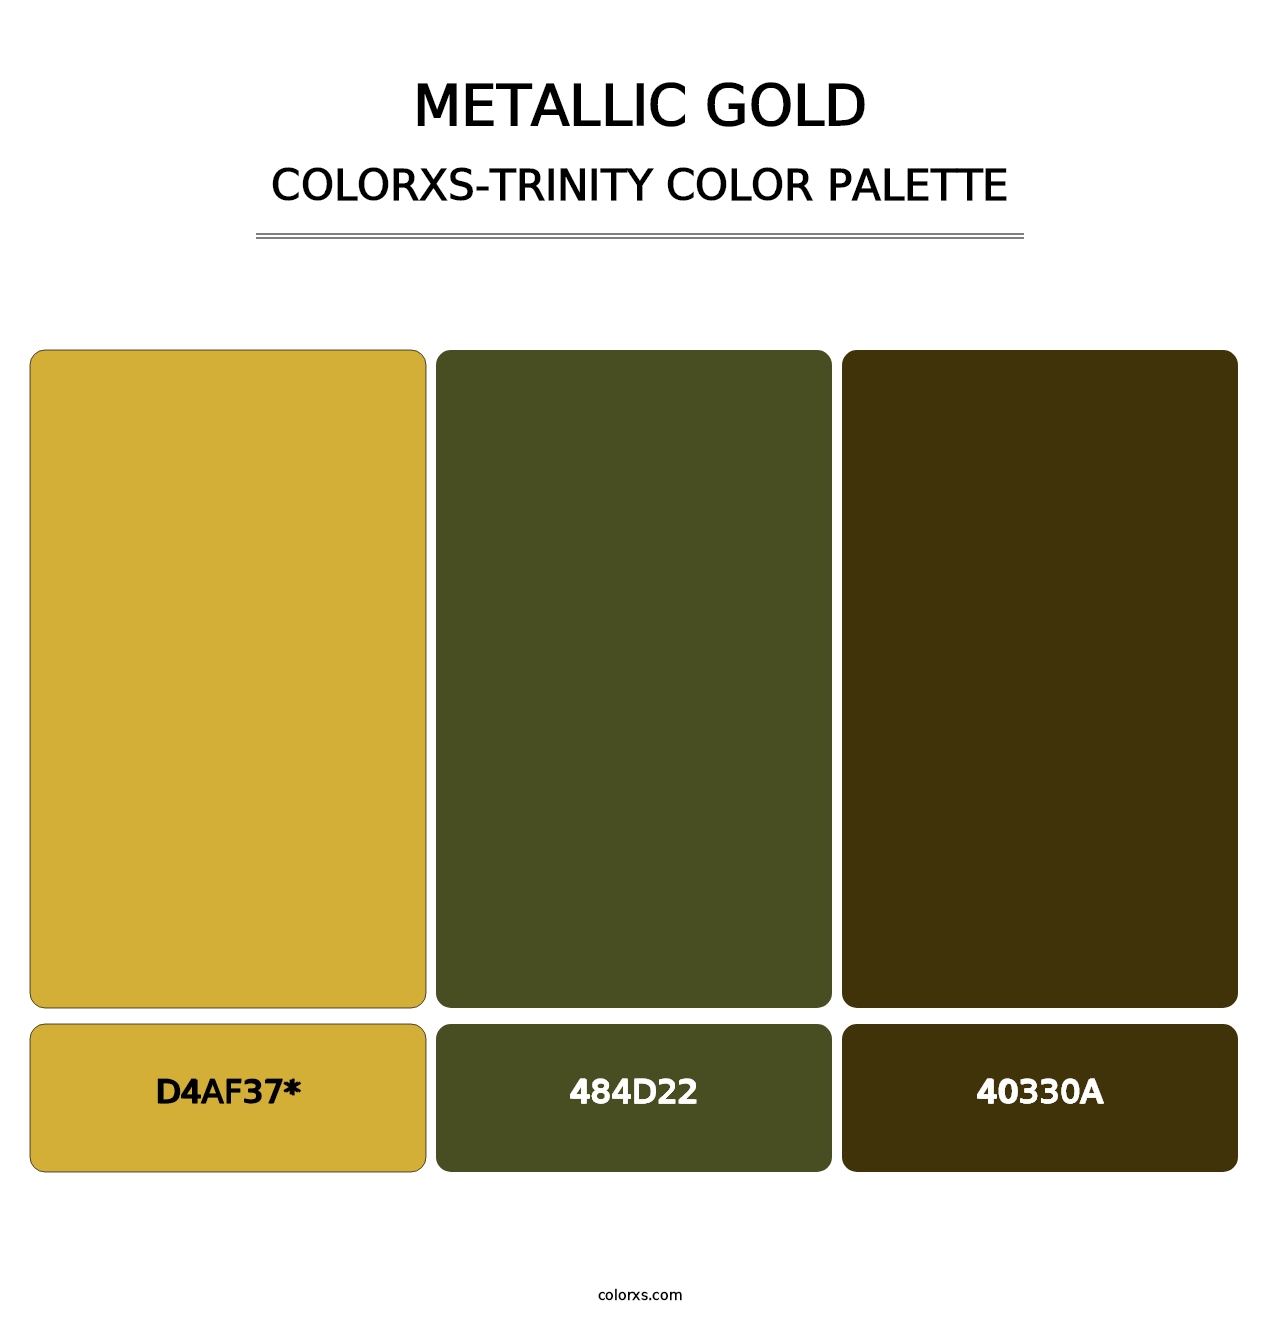 Metallic Gold - Colorxs Trinity Palette